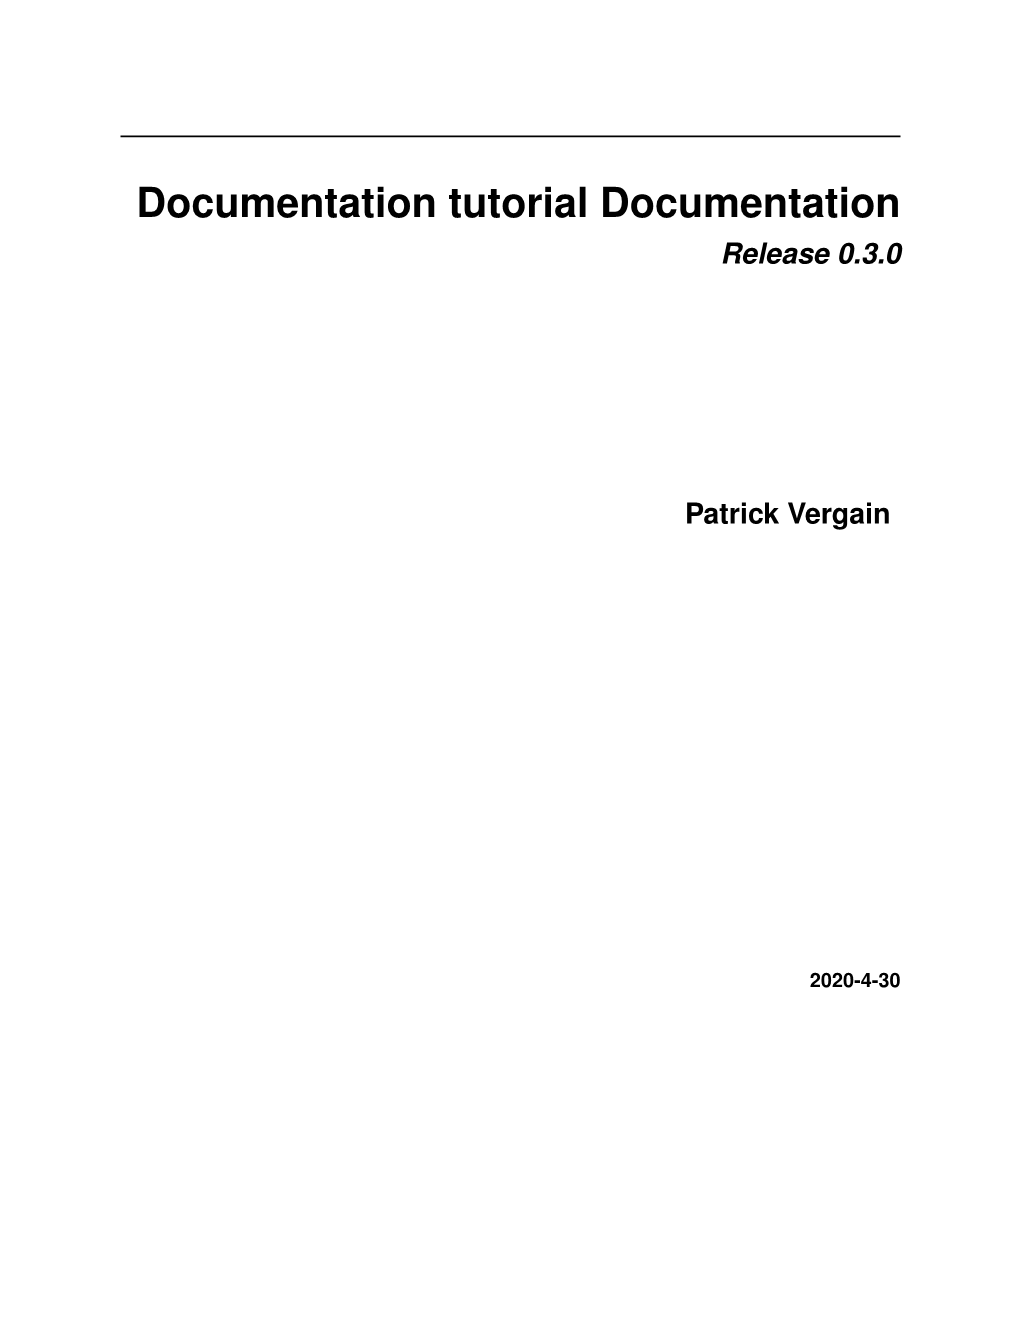 Documentation Tutorial Documentation Release 0.3.0